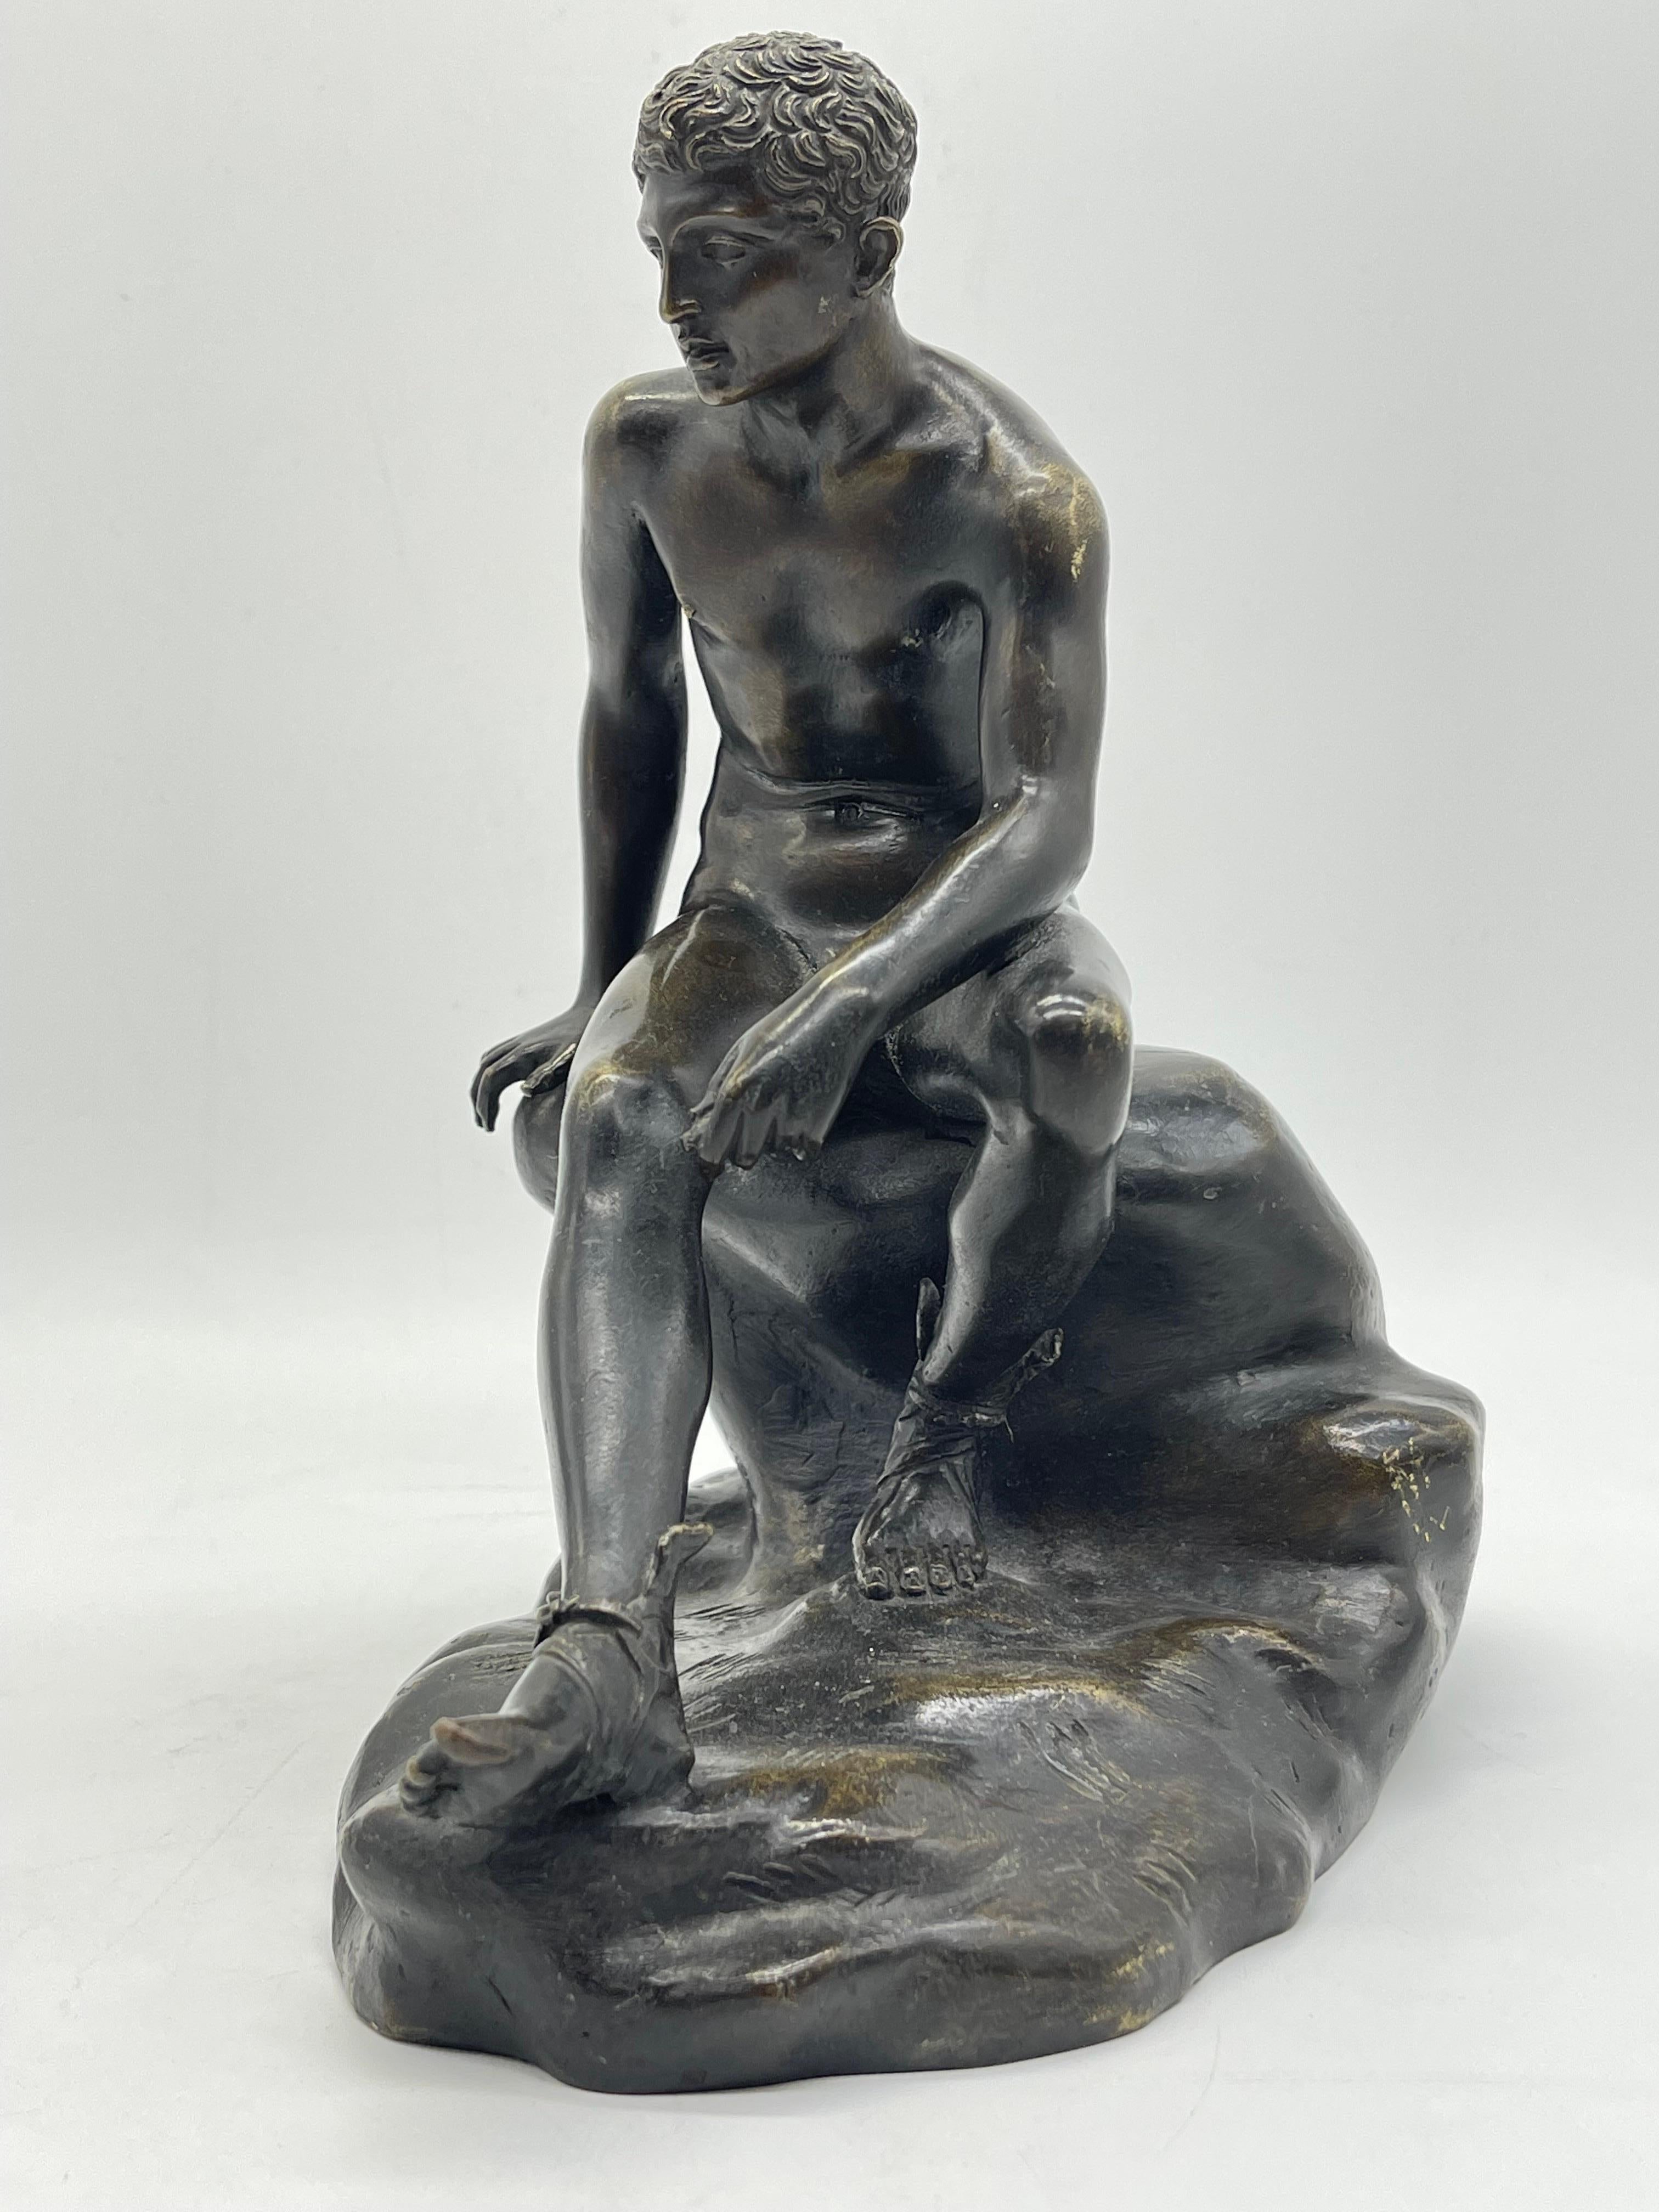 Seated athletic bronze sculpture / Figure Greek - Roman mythology For Sale 2